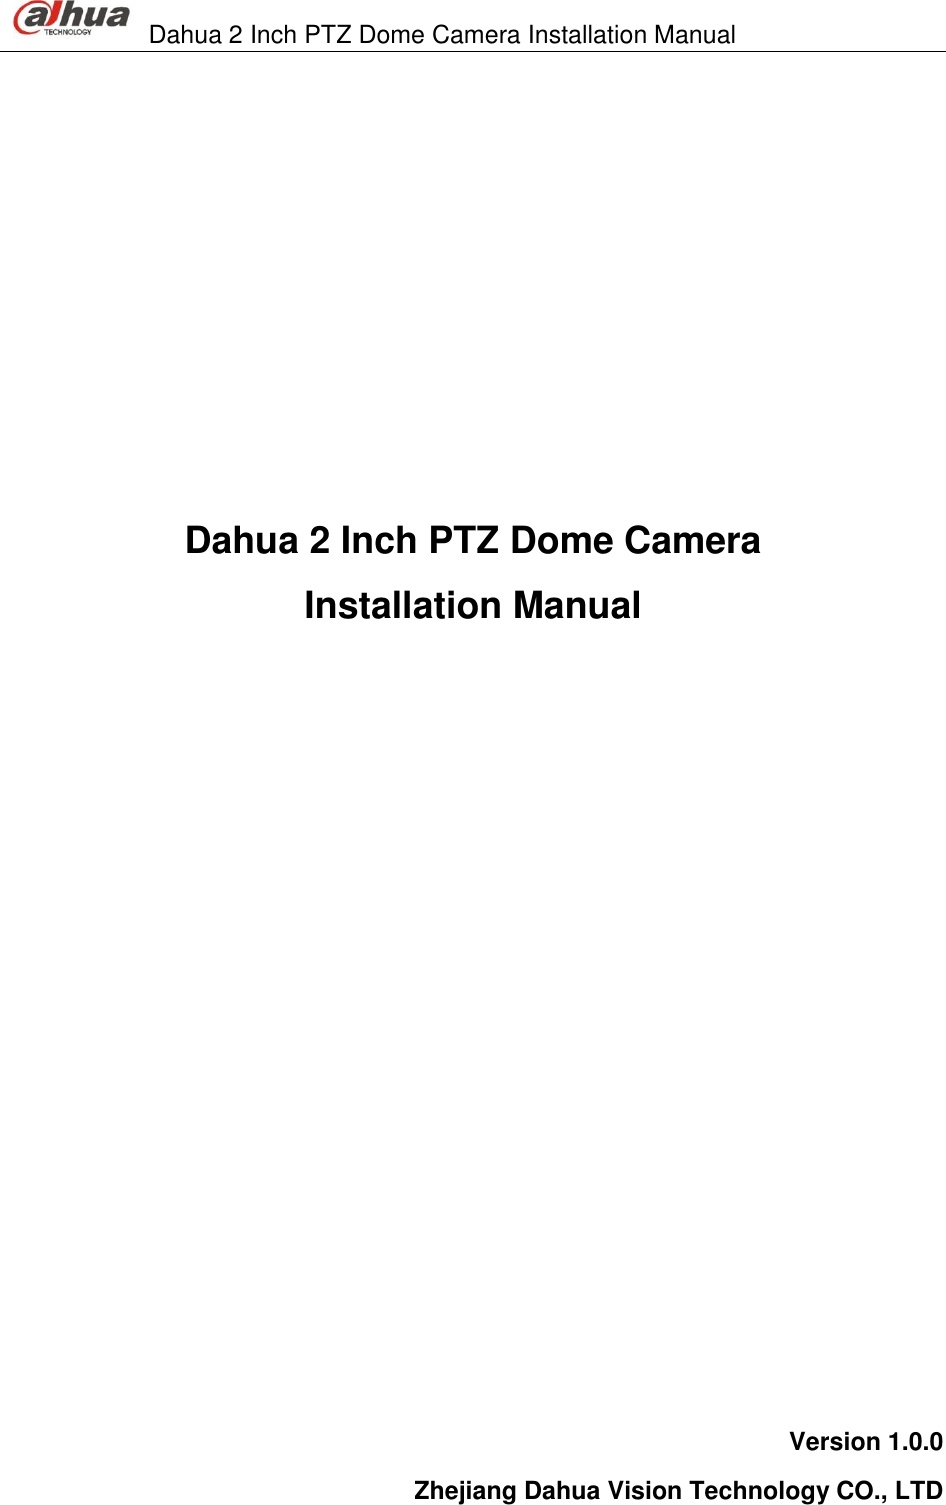                                Dahua 2 Inch PTZ Dome Camera Installation Manual         Dahua 2 Inch PTZ Dome Camera  Installation Manual              Version 1.0.0 Zhejiang Dahua Vision Technology CO., LTD 